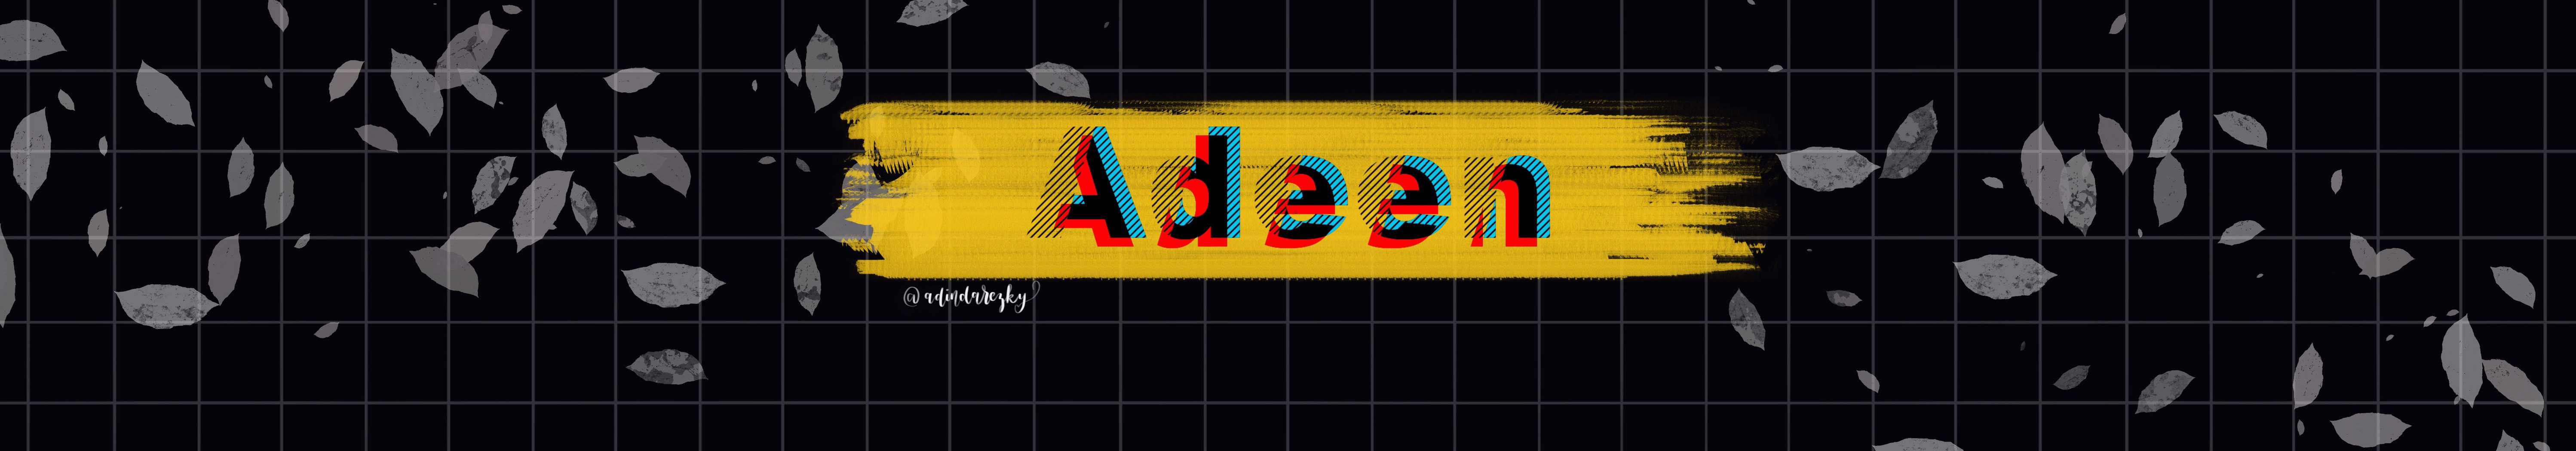 Adeen .'s profile banner